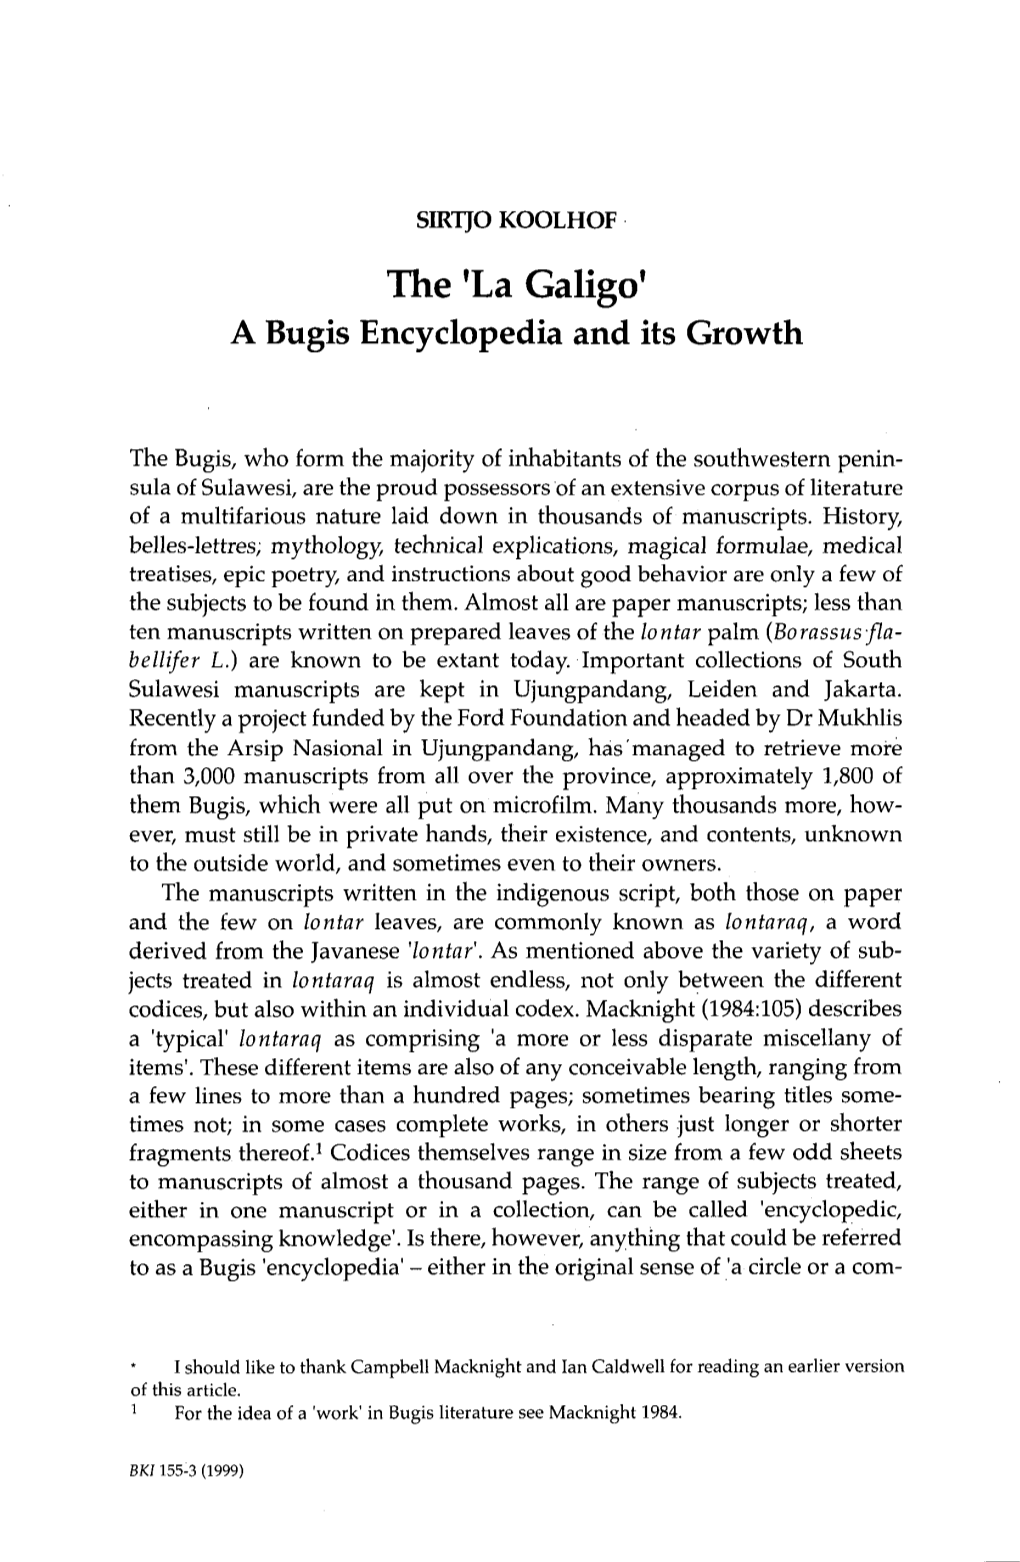 The 'La Galigo' a Bugis Encyclopedia and Its Growth